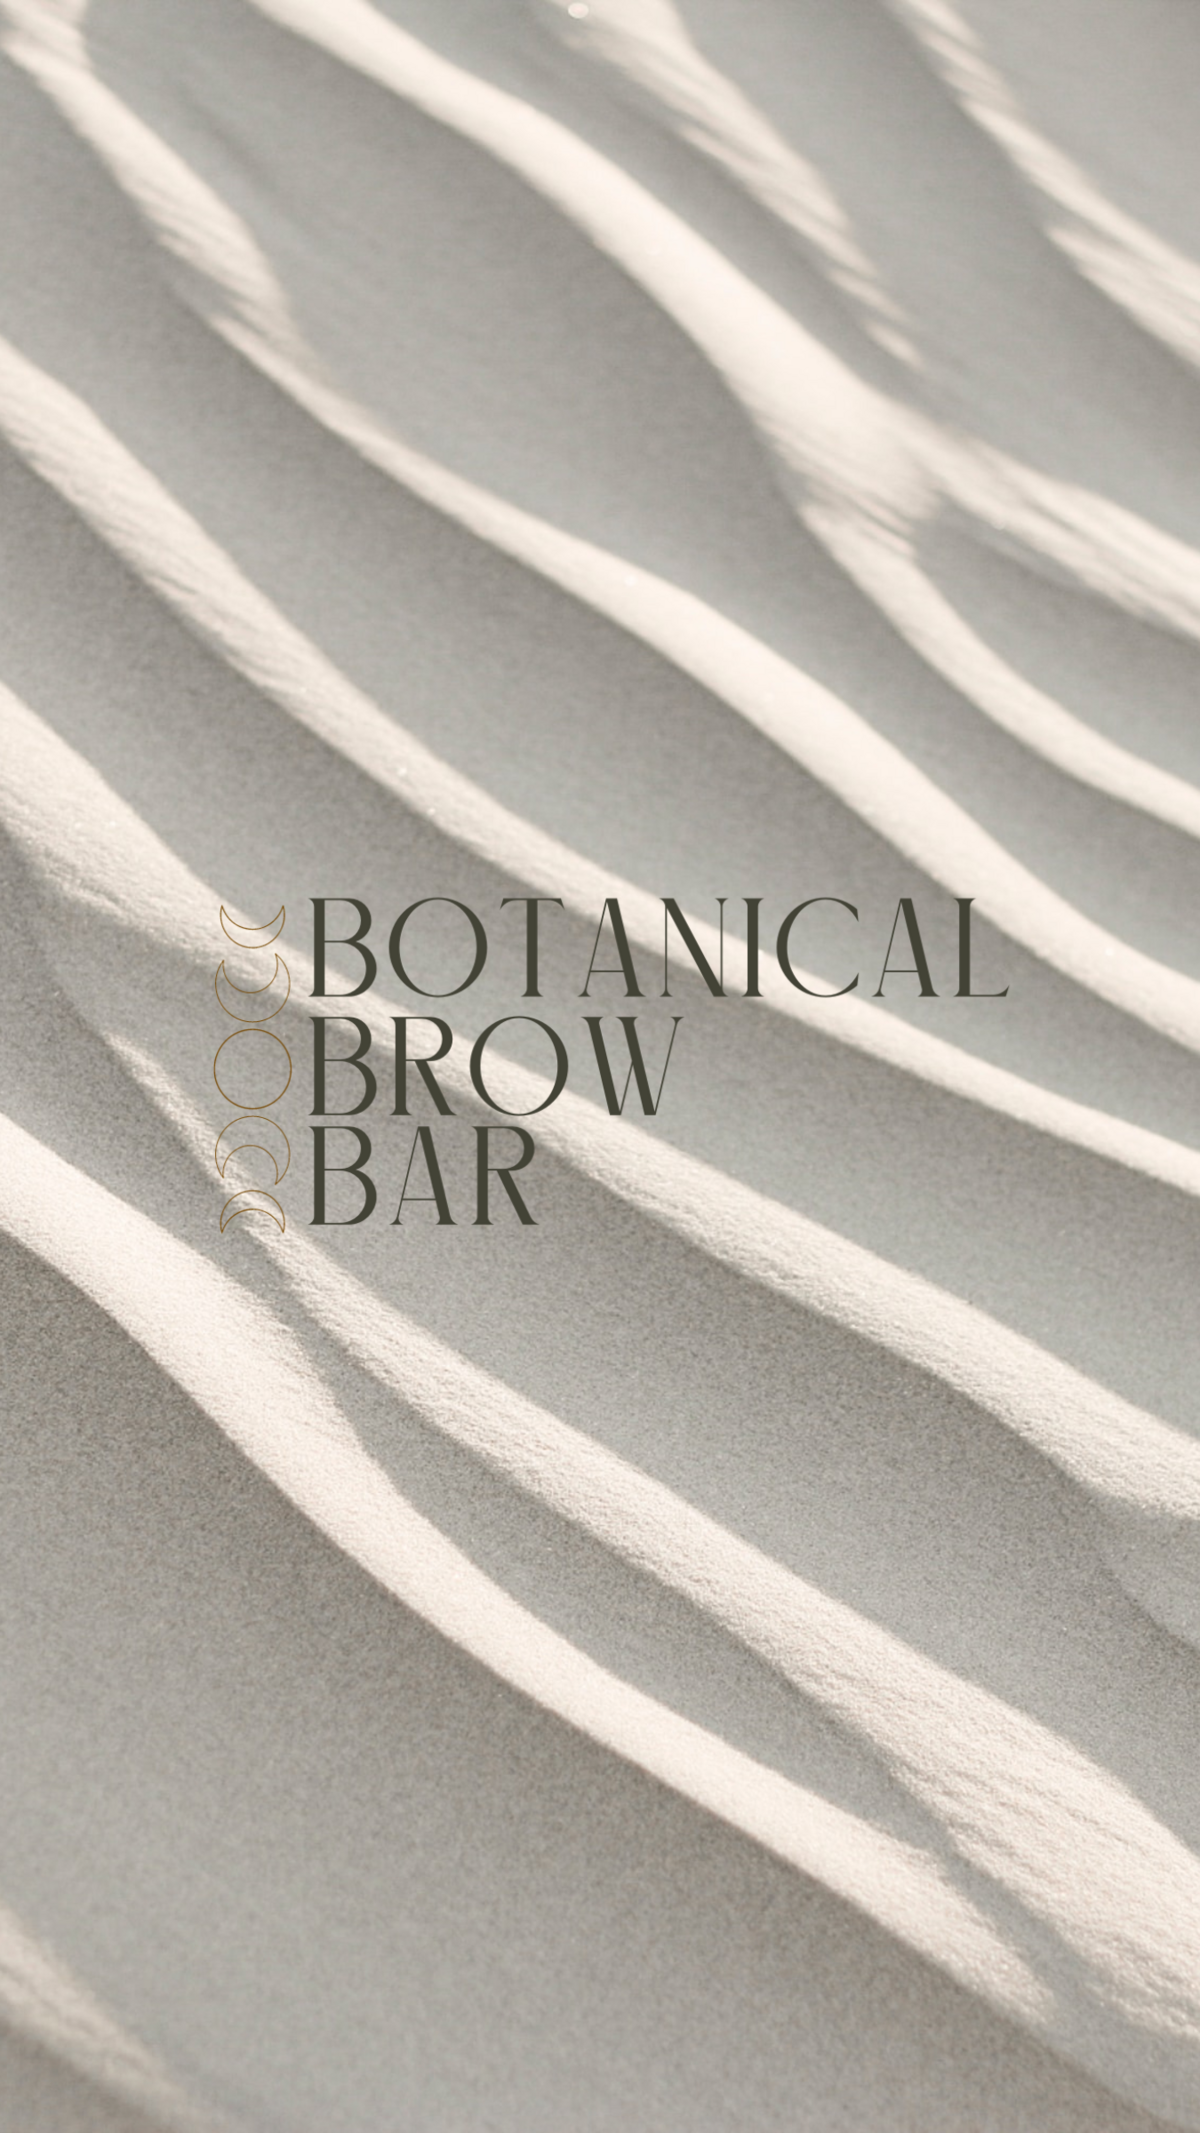 Botanical Brow Bar- Website and Brand Client4